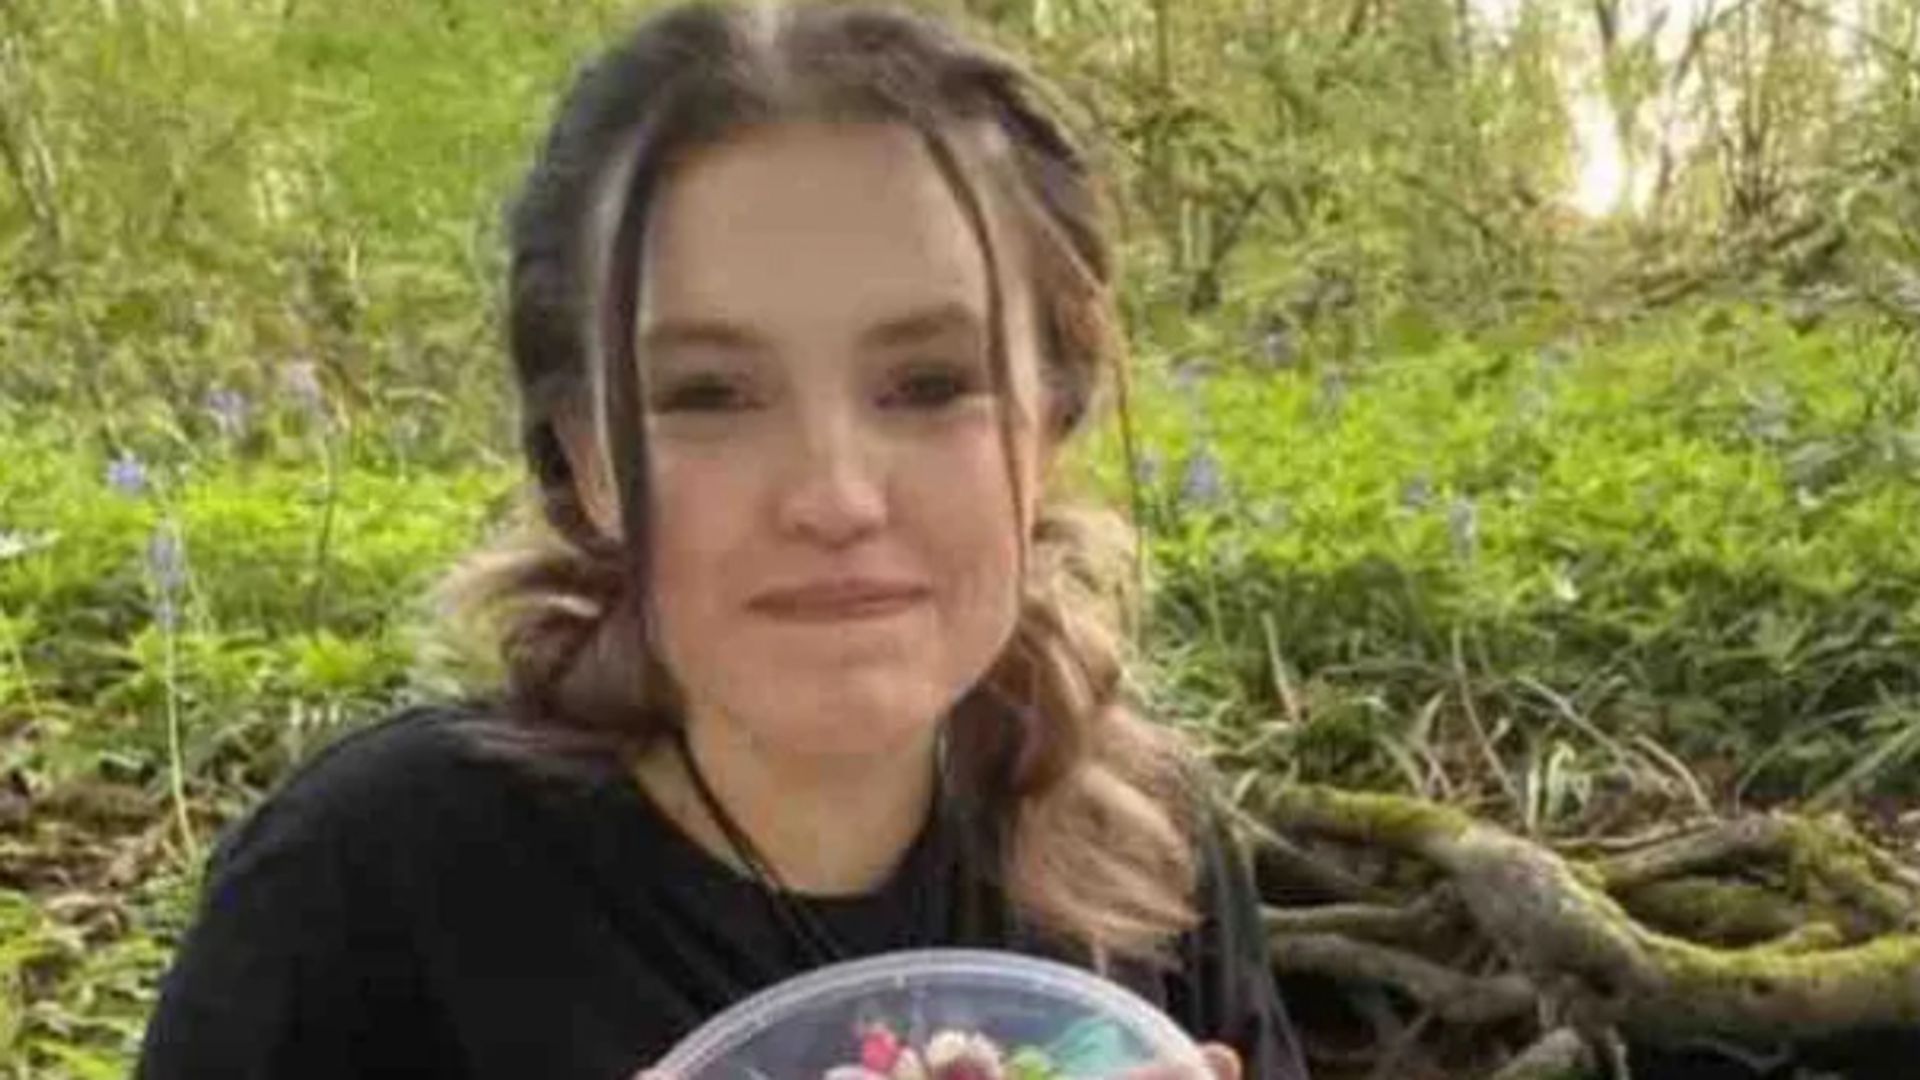 Girl, 17, dies of suspected ecstasy overdose at amusement park music event